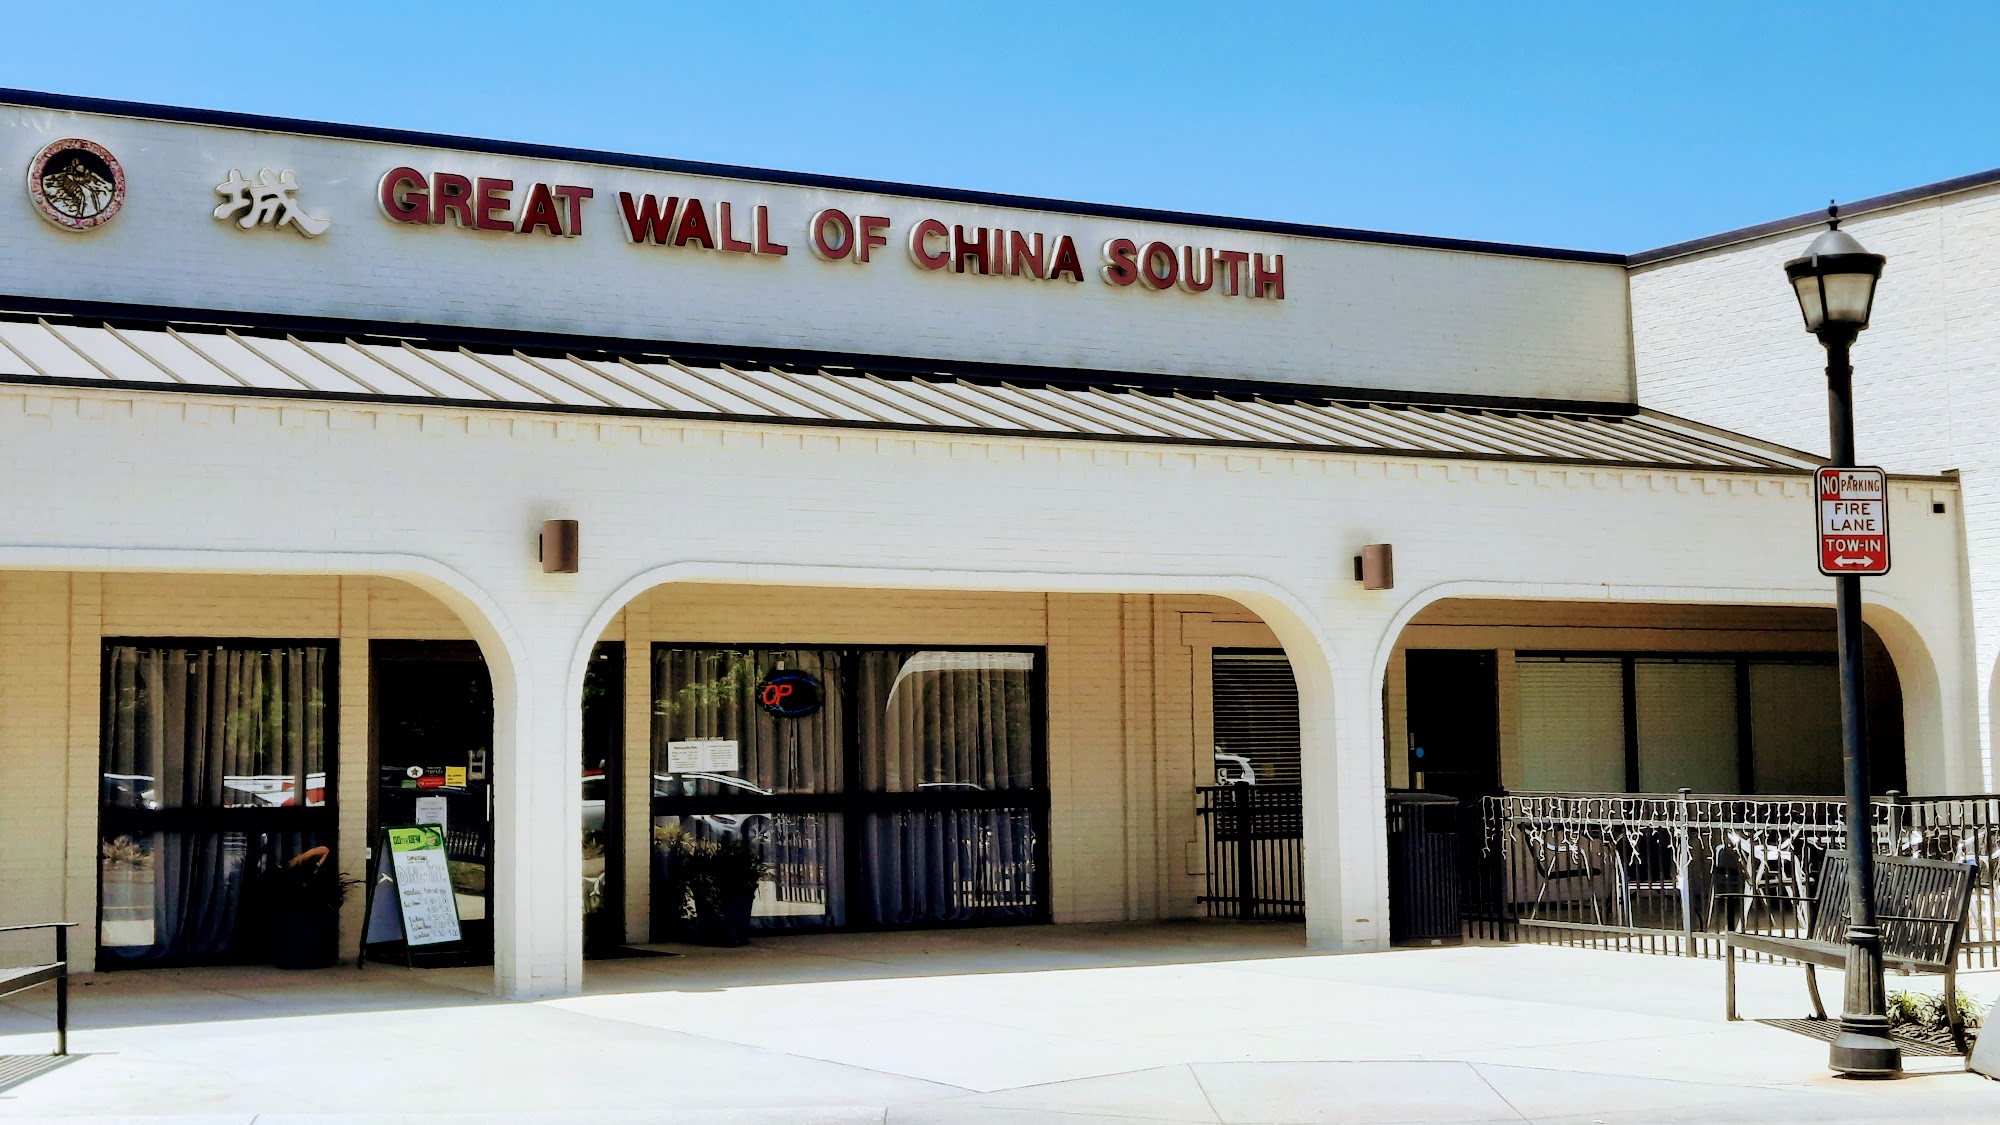 Great Wall of China South